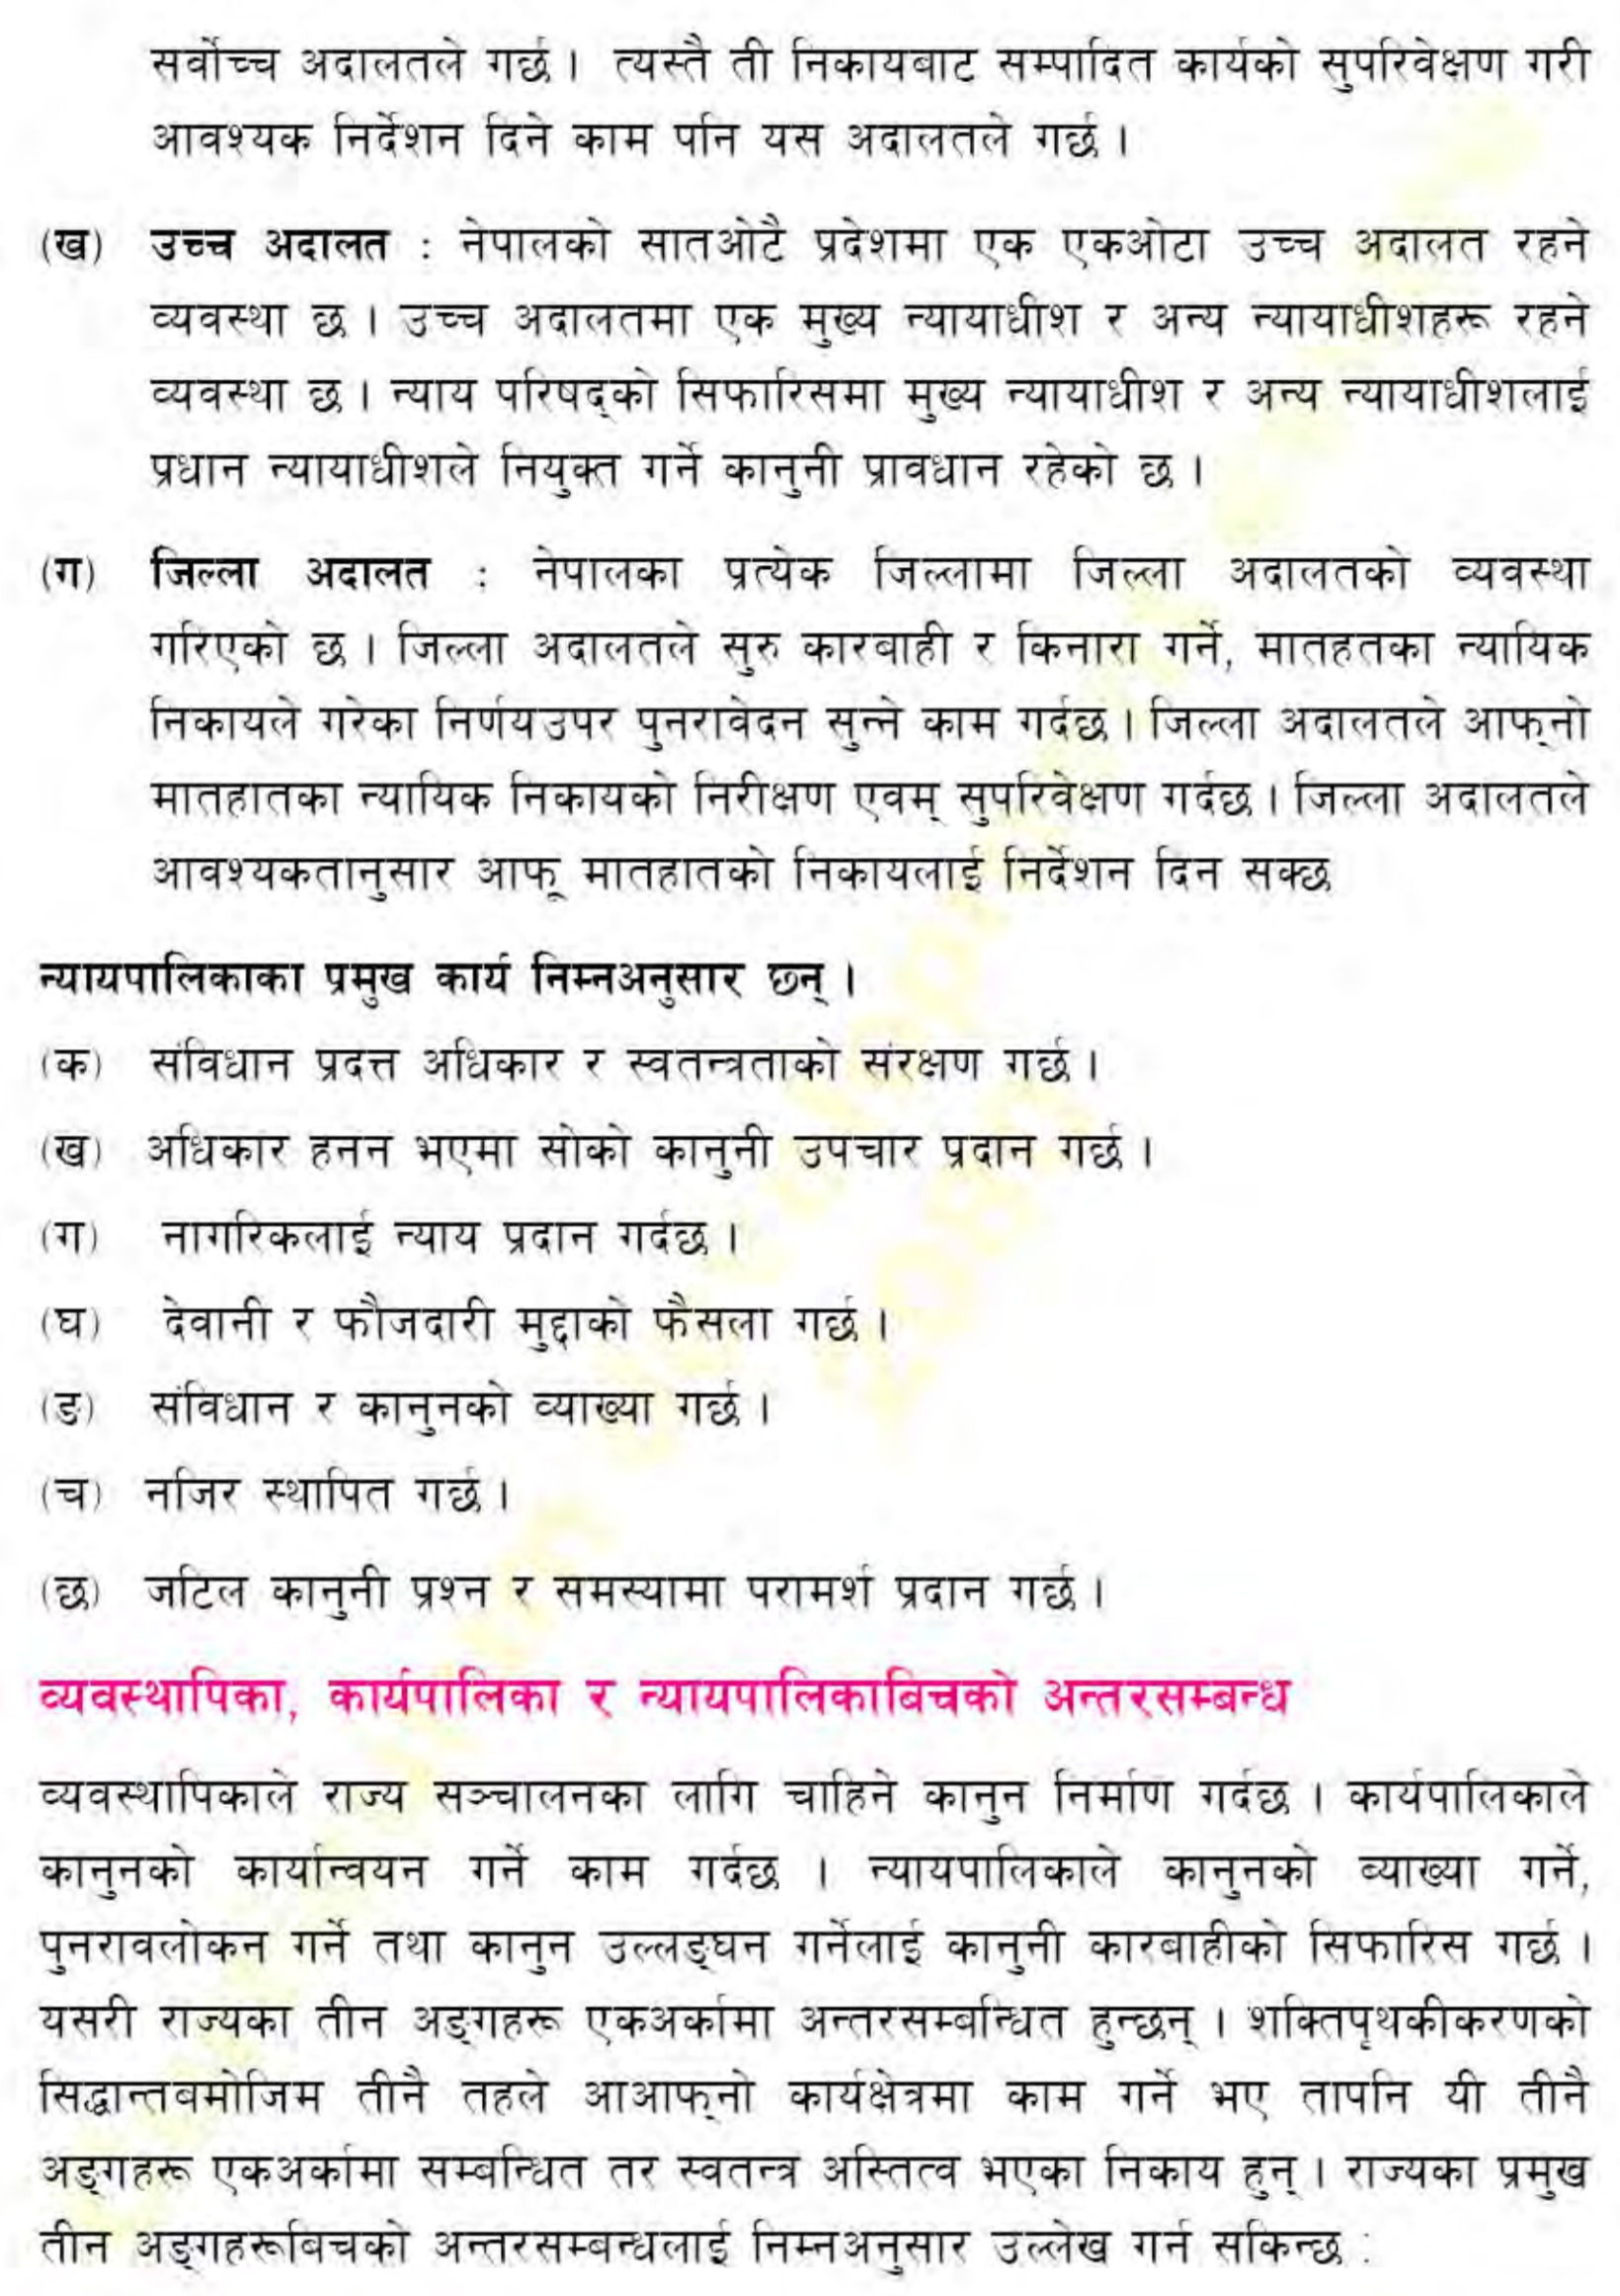 Class 10 Social Studies Unit 5 Nagrik Chethana Lesson 3 Nayaypalika Exercise Question Answer 2080 Guide.